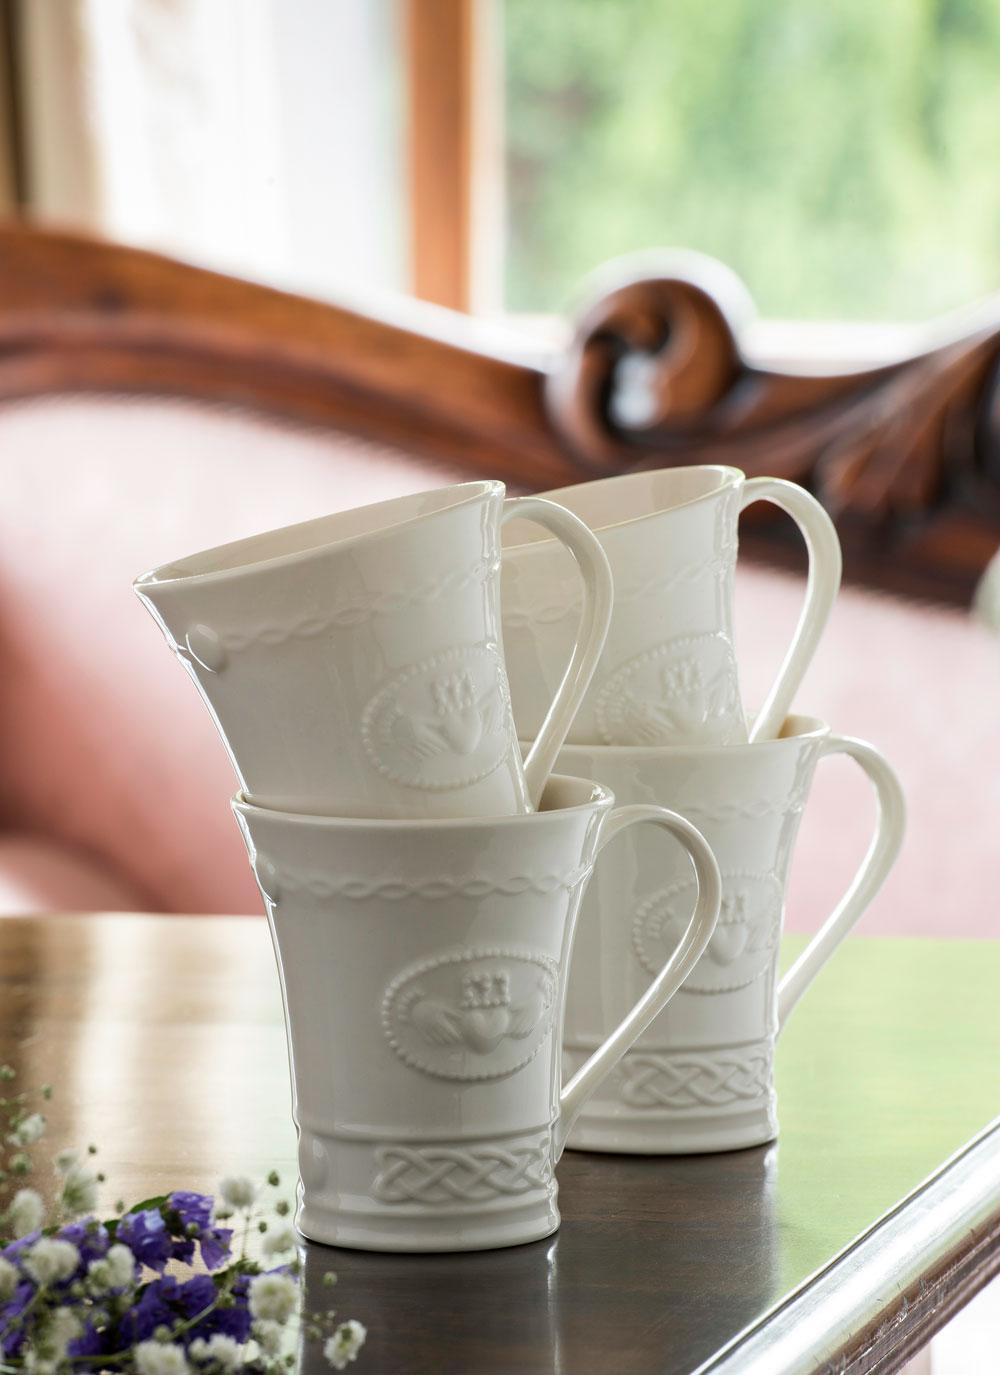 Coffee cups by Belleek made in Ireland